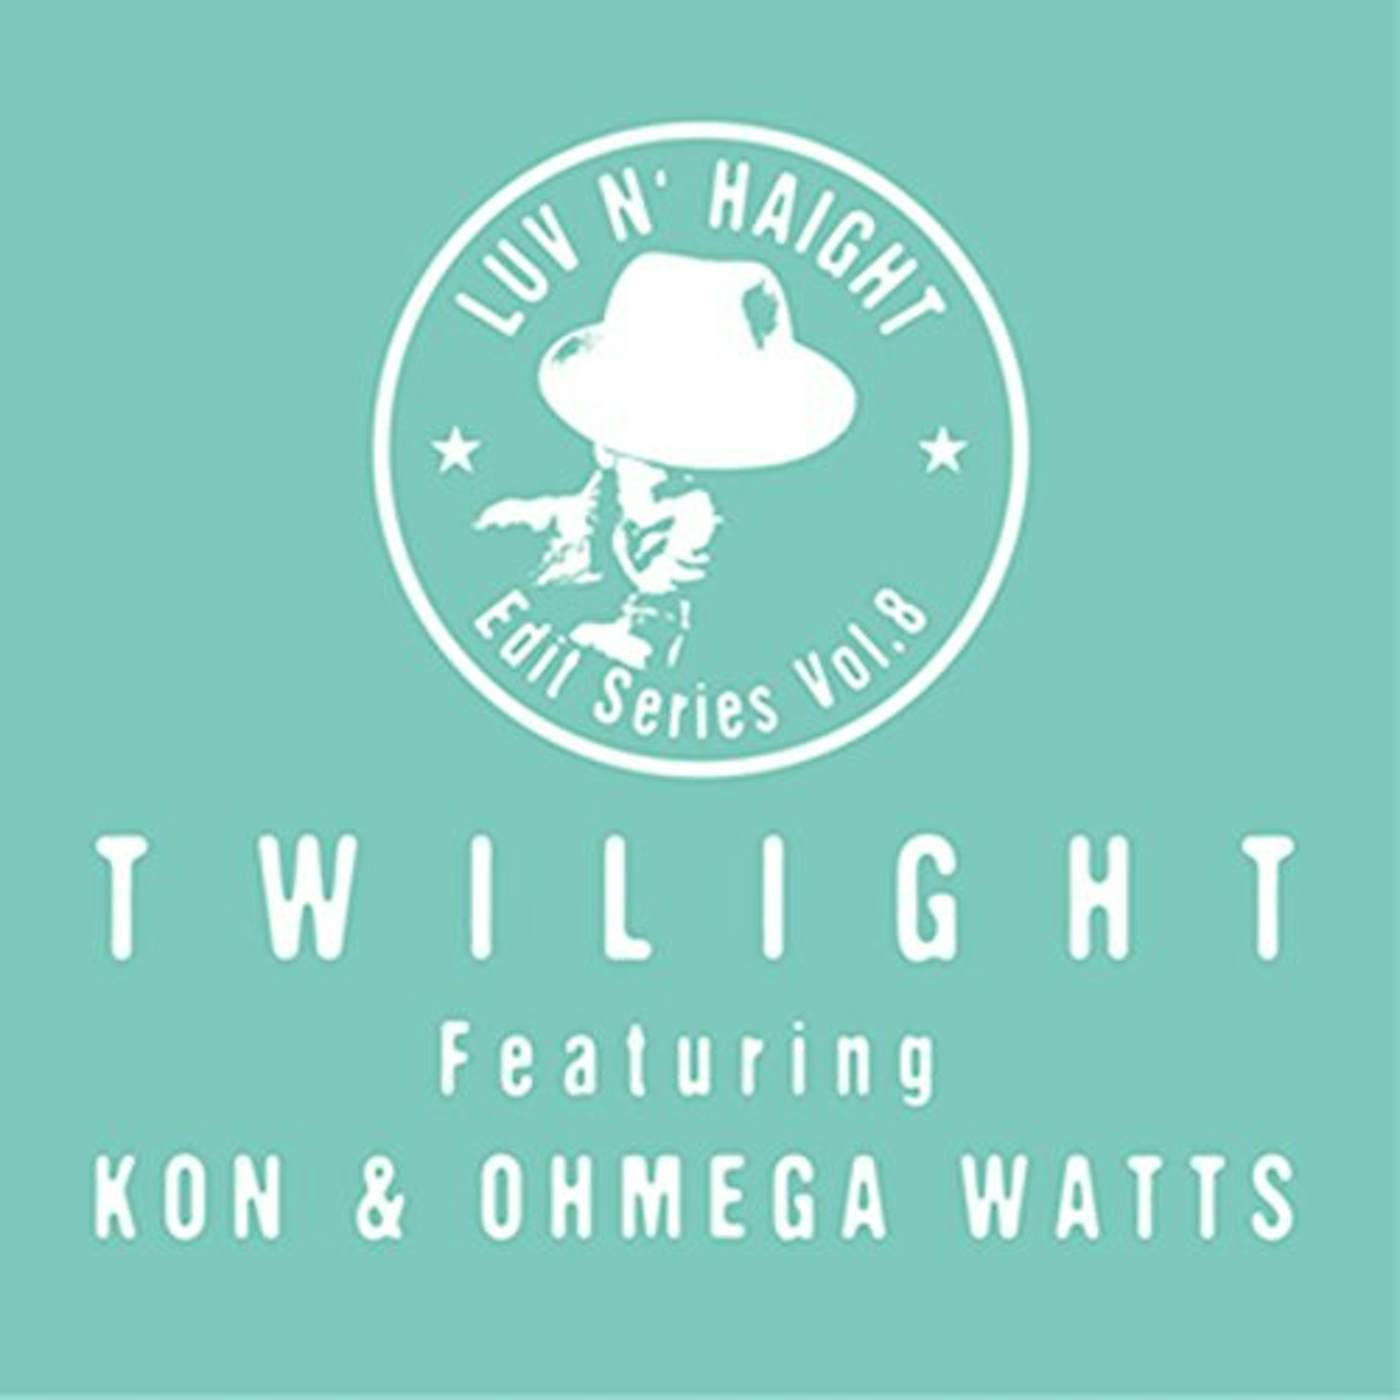 Twilight Luv N' Haight Edit Series Vol. 8: Play My Game Remixes Vinyl Record